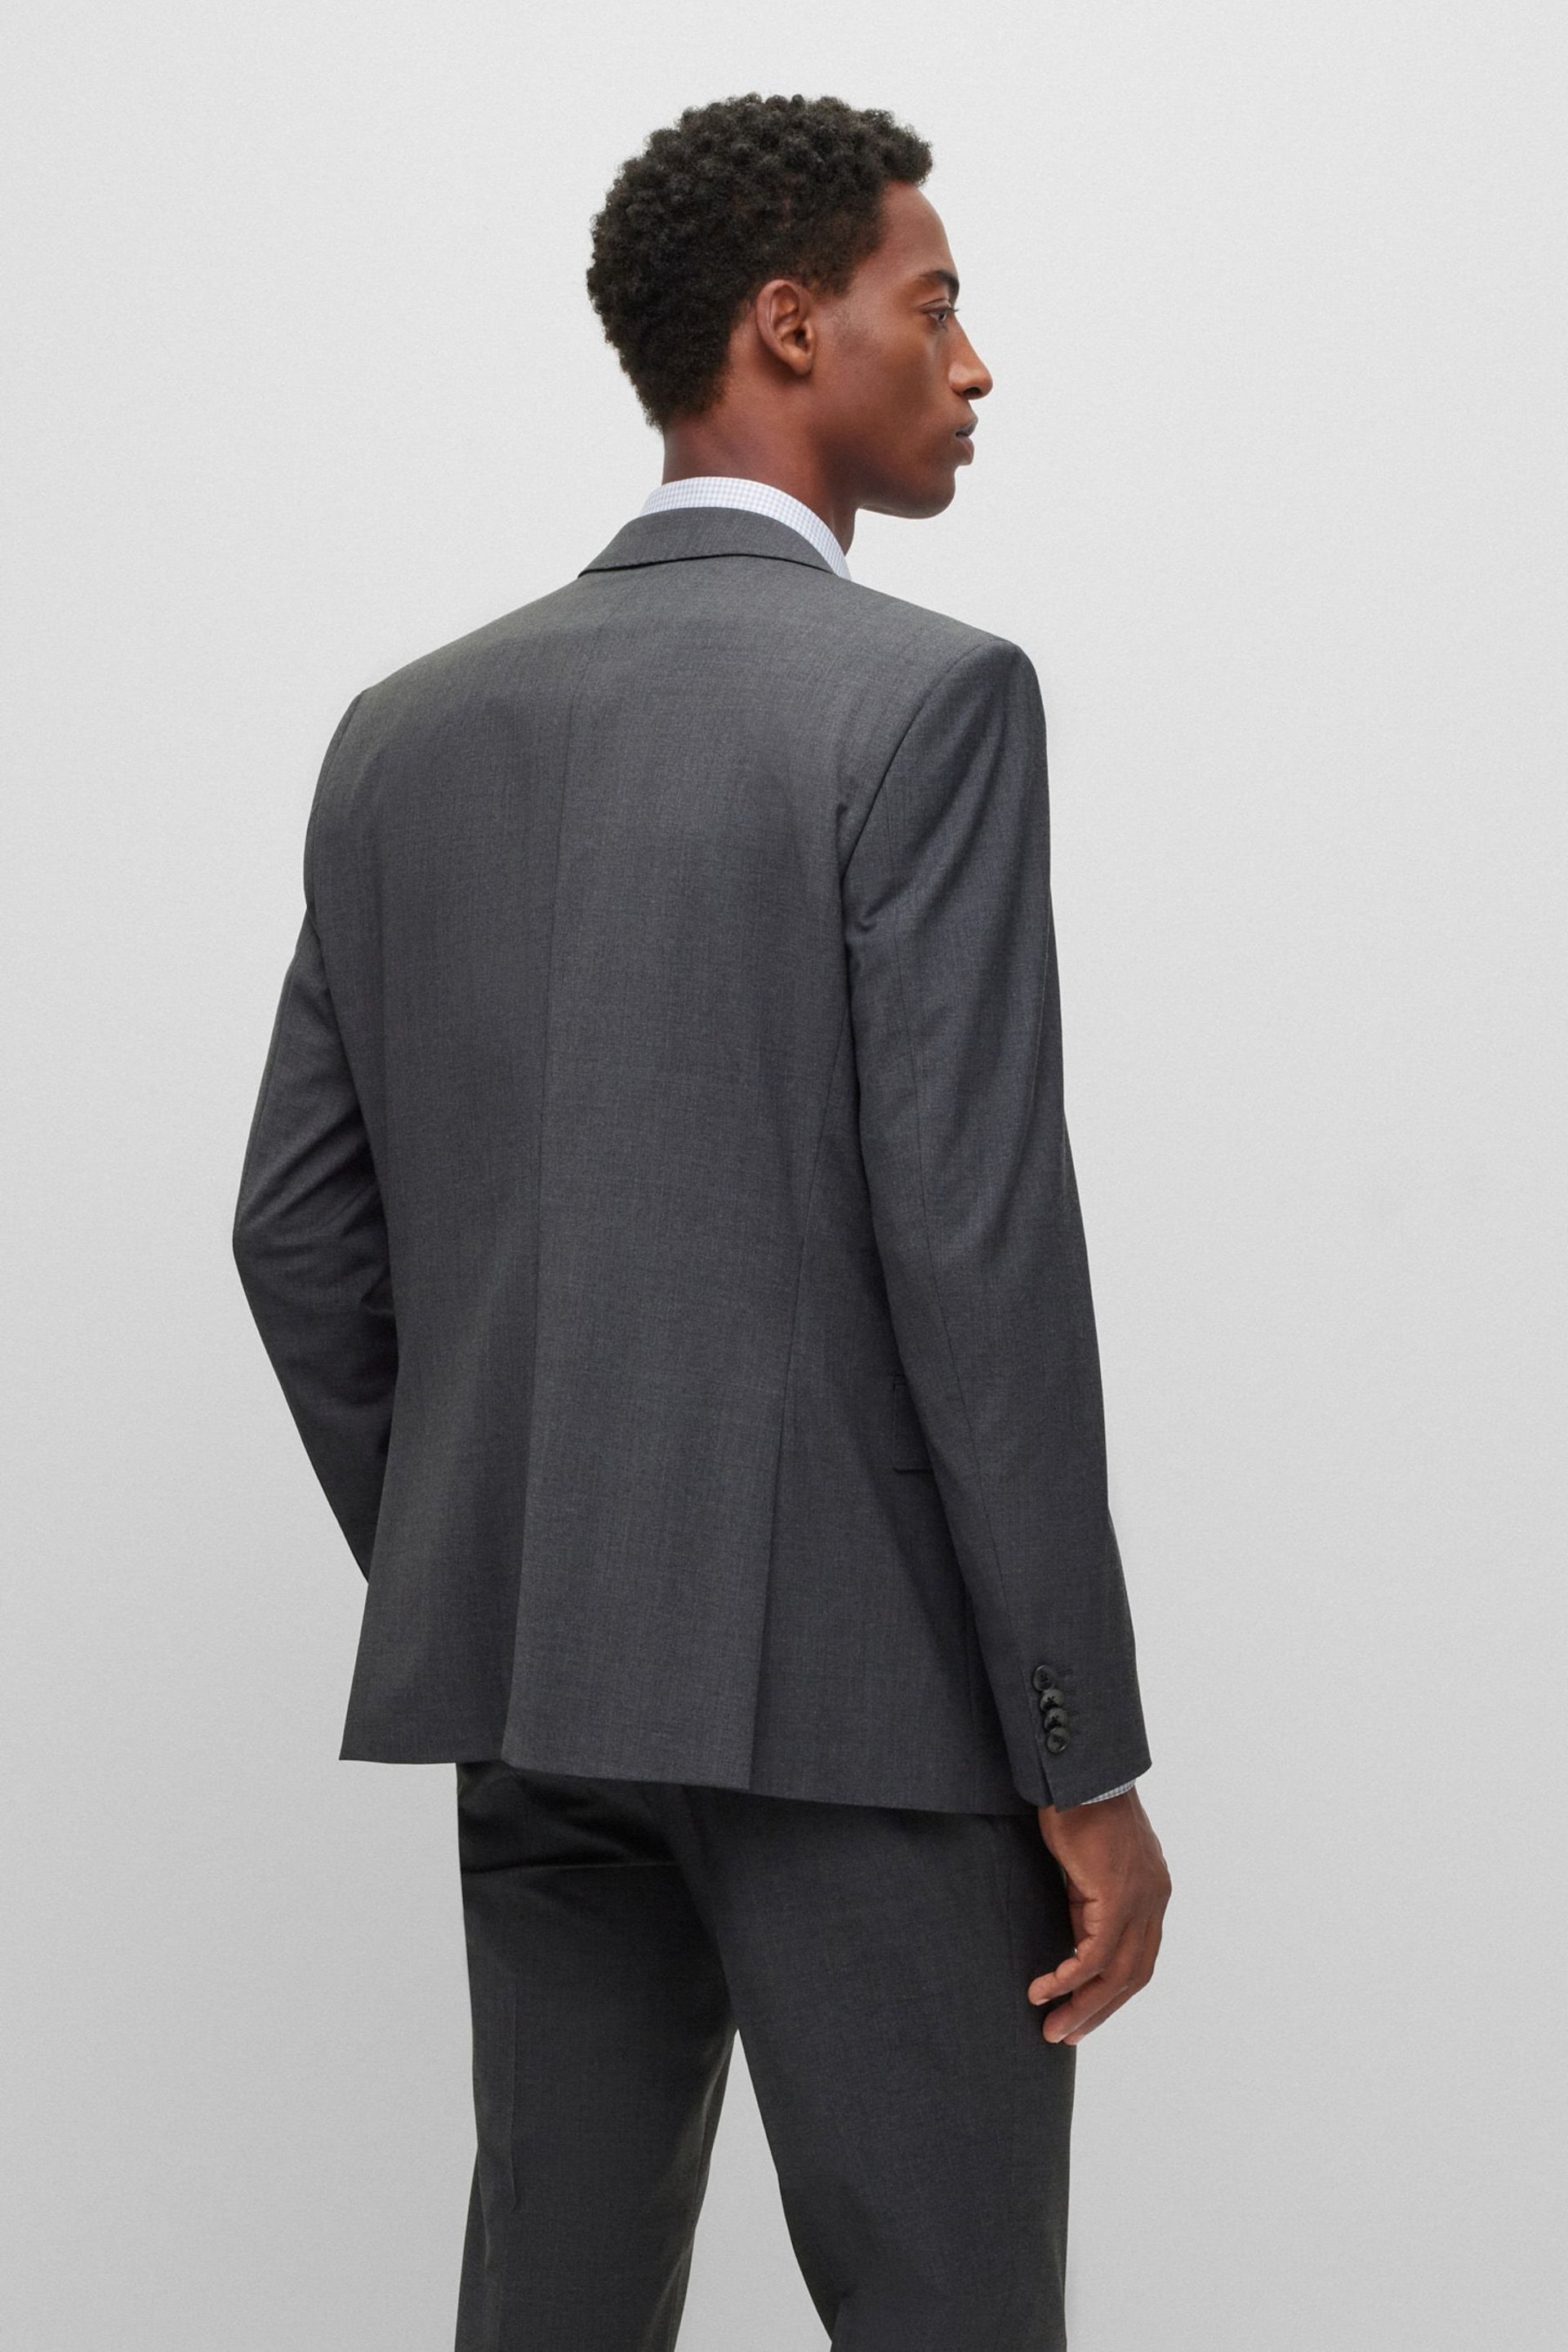 BOSS Grey Slim Fit Suit: Jacket - Image 3 of 6